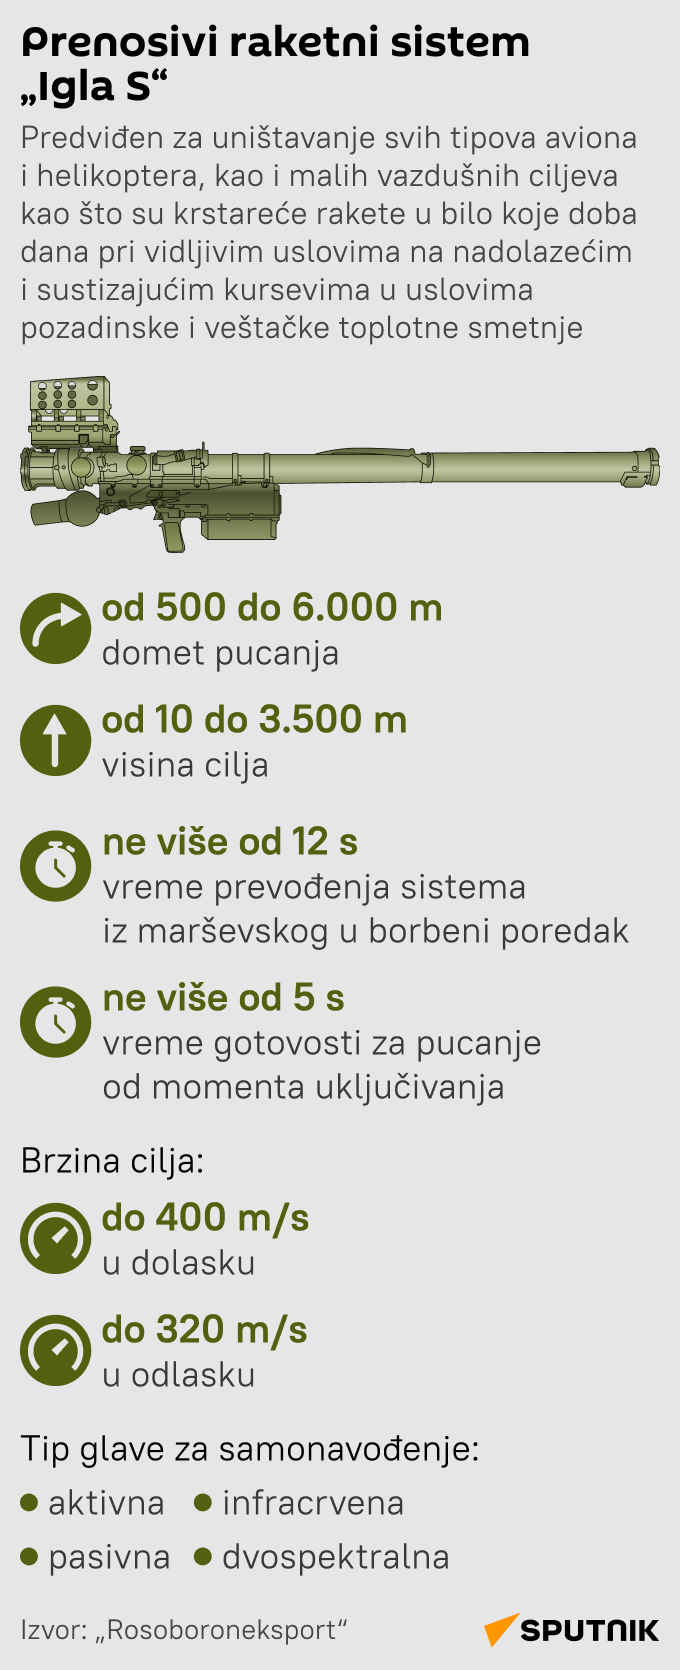 Infografika Prenosivi raketni sistem „Igla S“ LAT mob - Sputnik Srbija